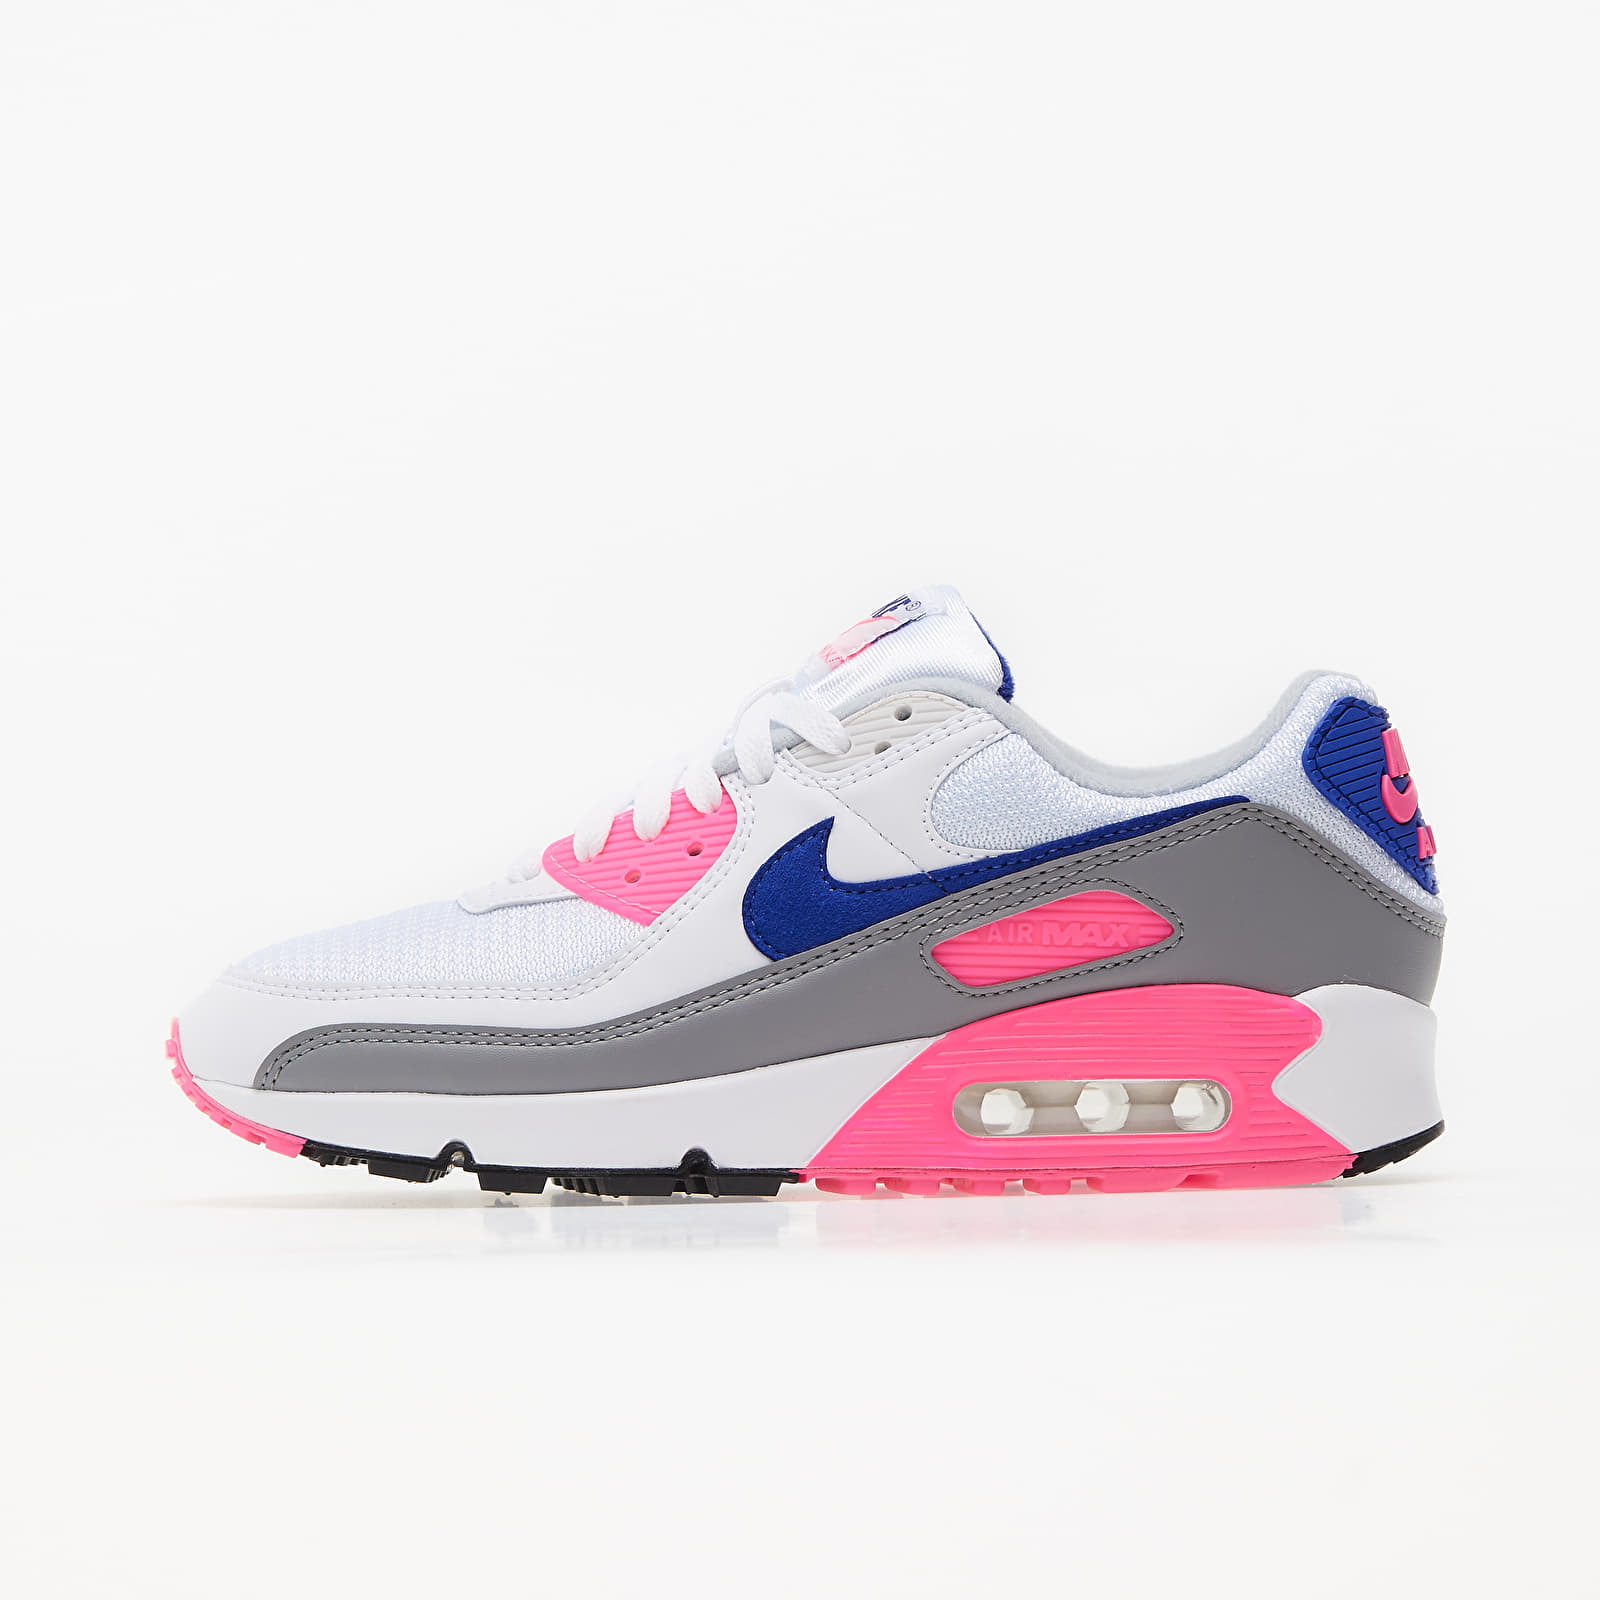 Дамски кецове и обувки Nike Air Max III White/ Vast Grey-Concord-Pink Blast 571648